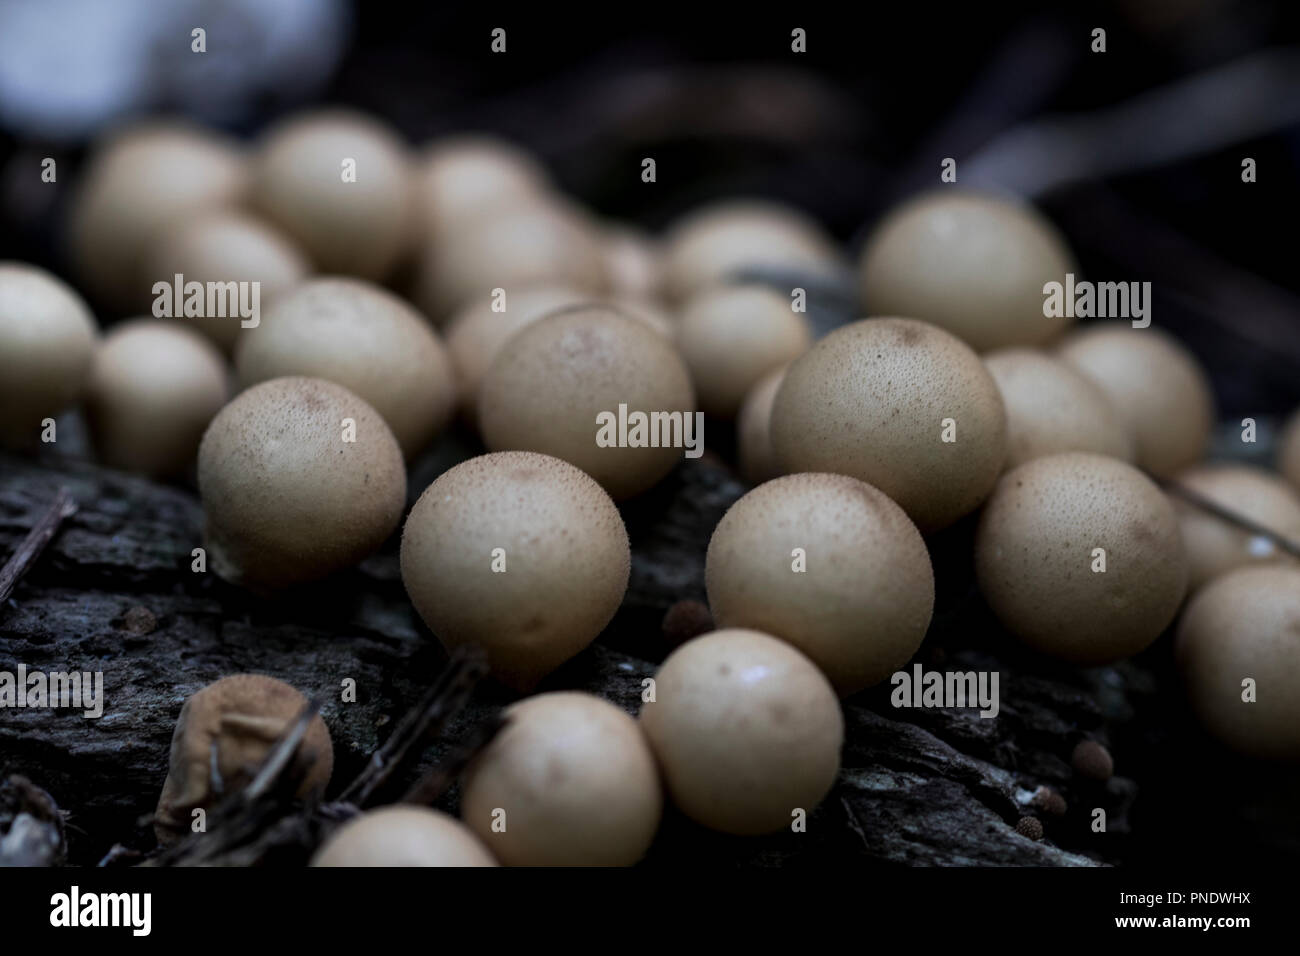 Funghi selvatici foraggio. Corpi fruttiferi di funghi puffball. Foto Stock